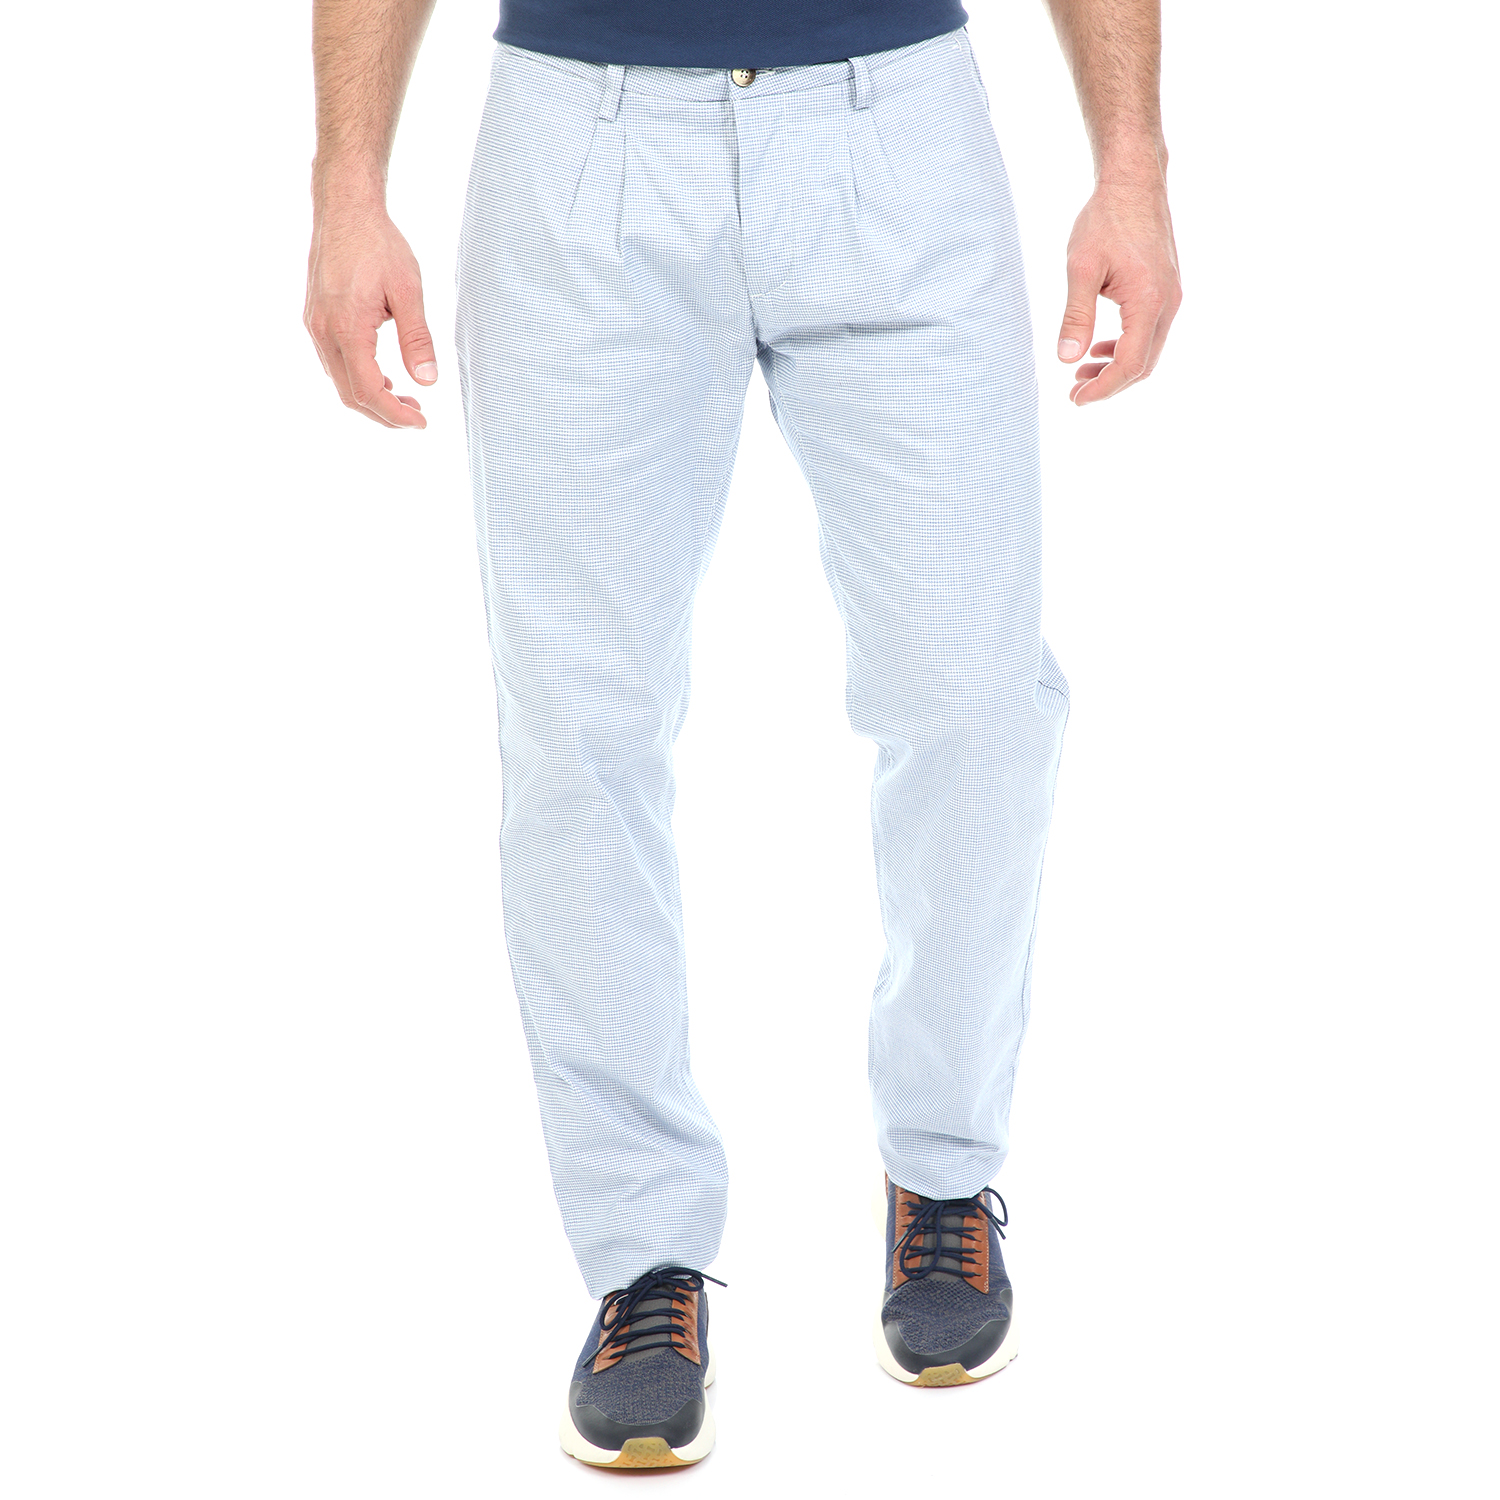 BROOKSFIELD - Ανδρικό παντελόνι chino BROOKSFIELD γαλάζιο Ανδρικά/Ρούχα/Παντελόνια/Chinos